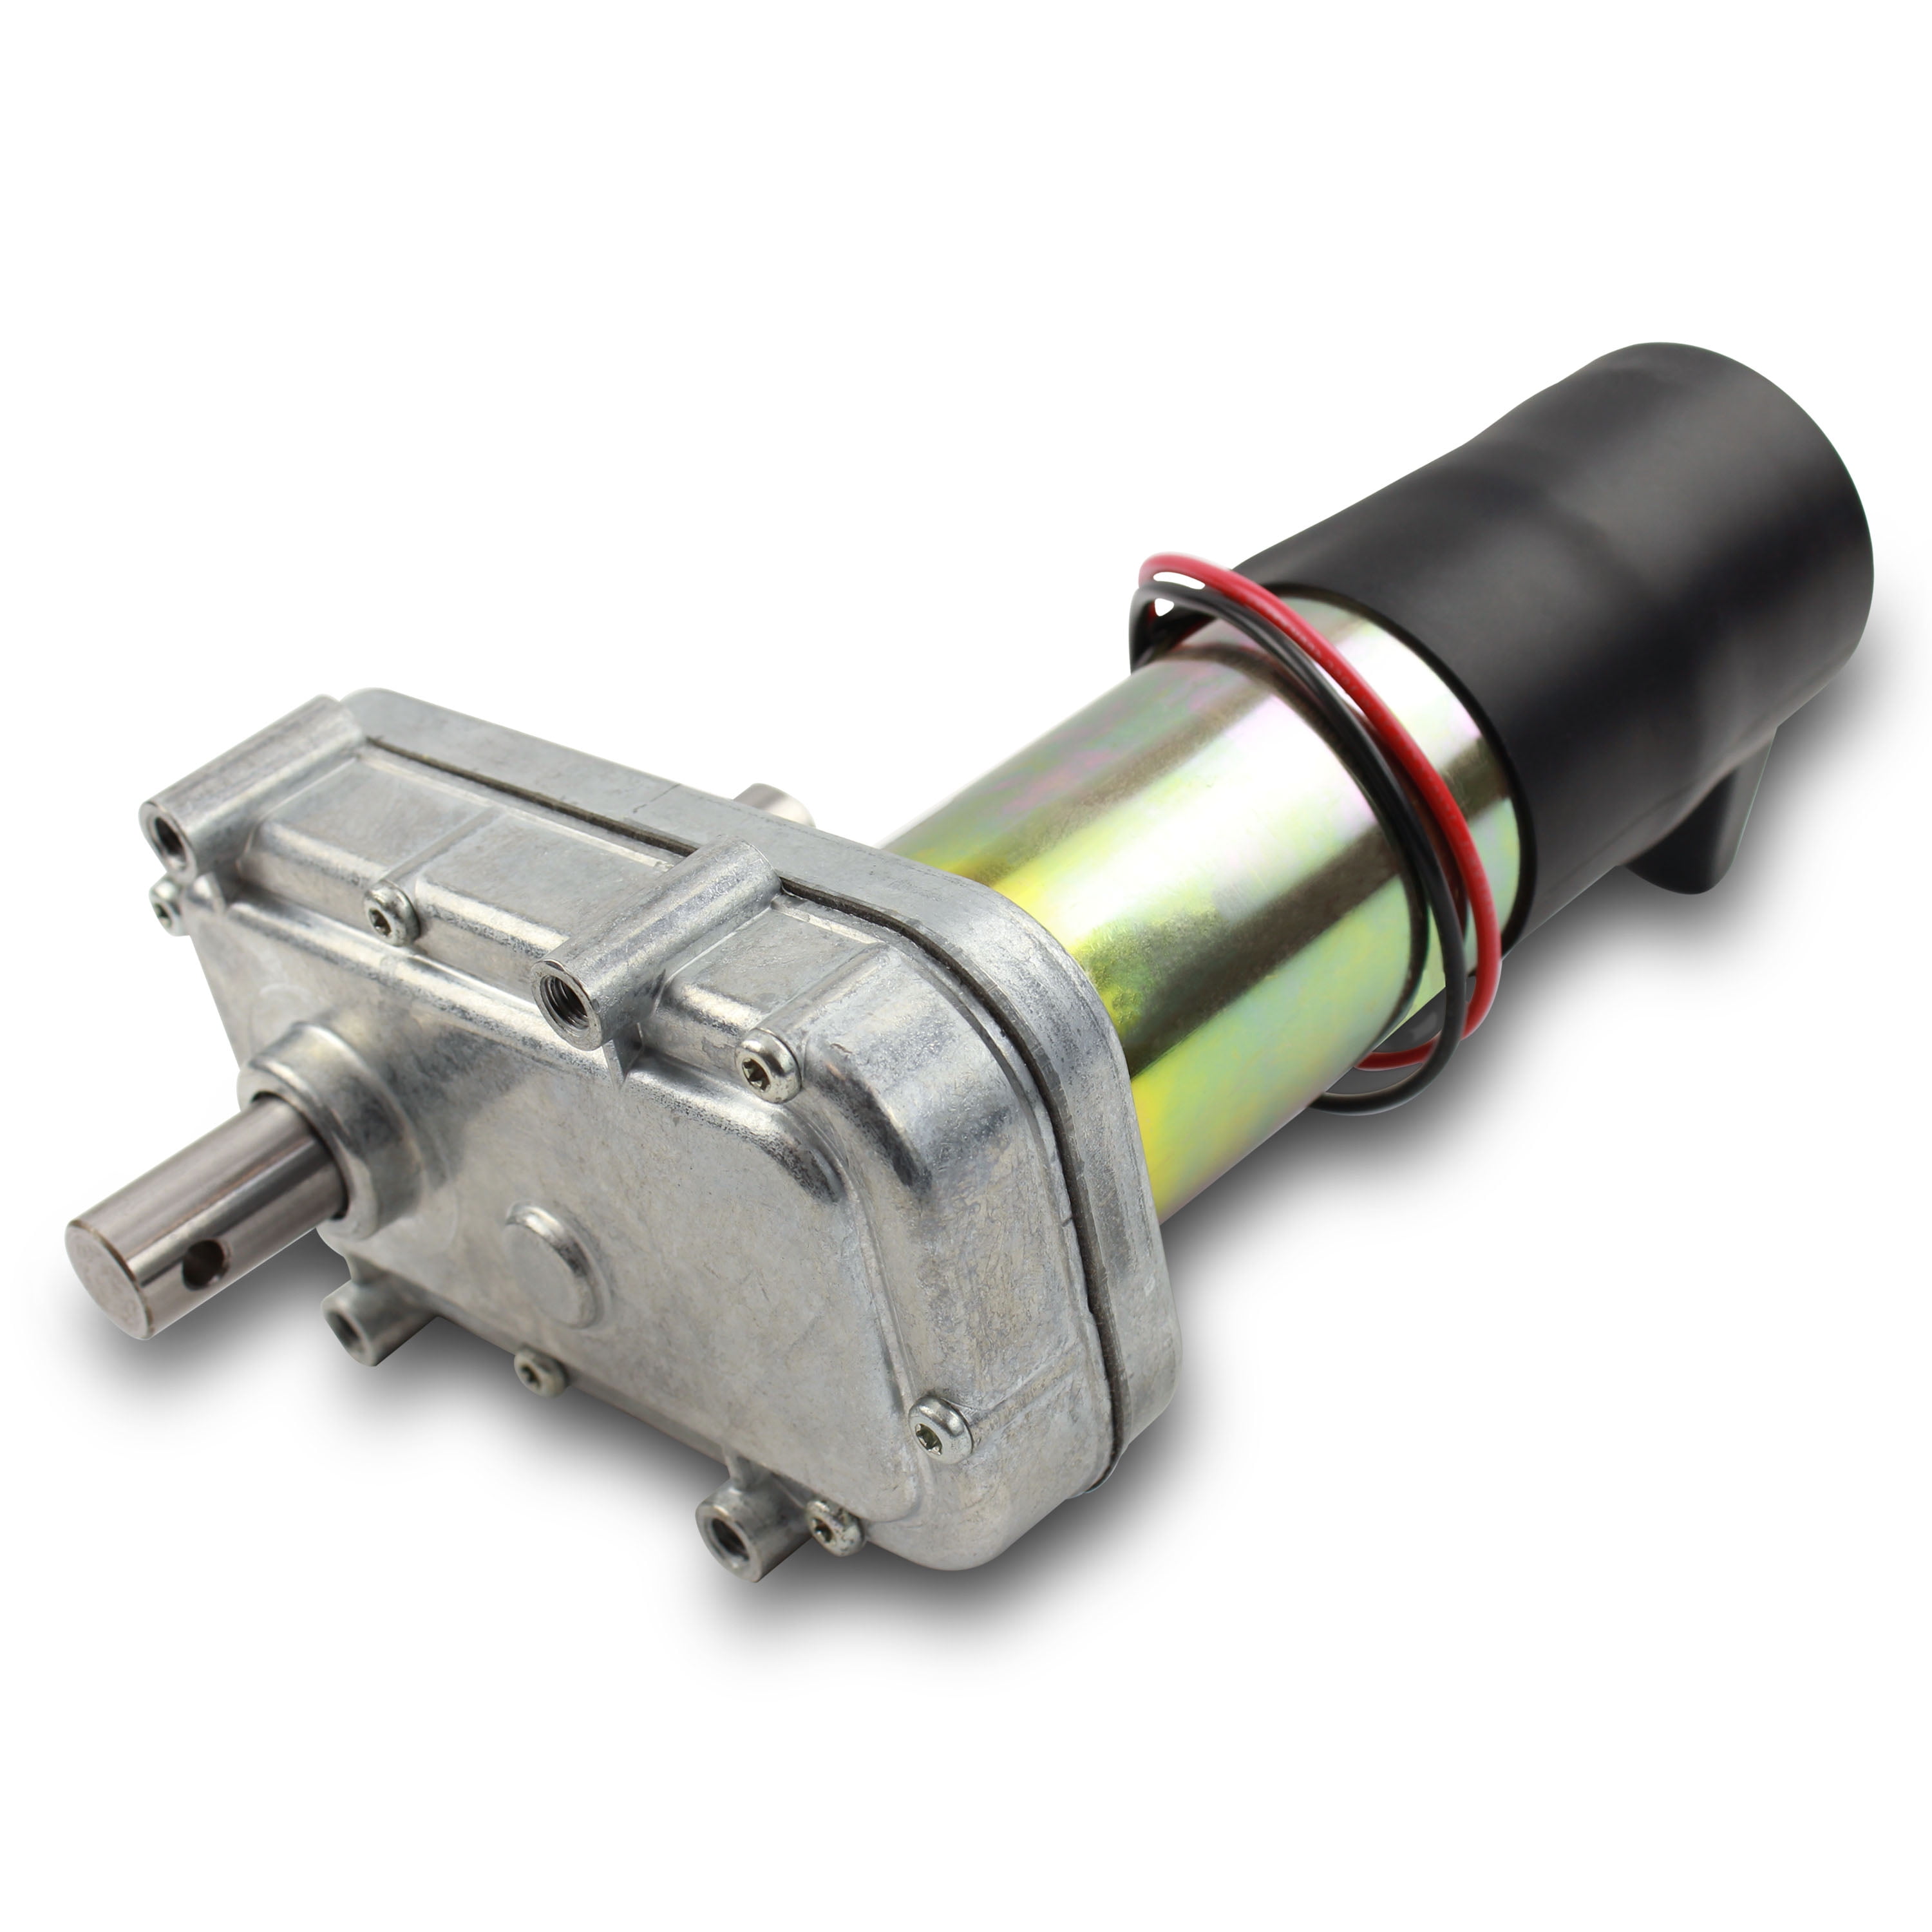 New RV Klauber Power Gear Slideout Motor #1010000010 523432 524377 Power Gear Slide Out Fault Code